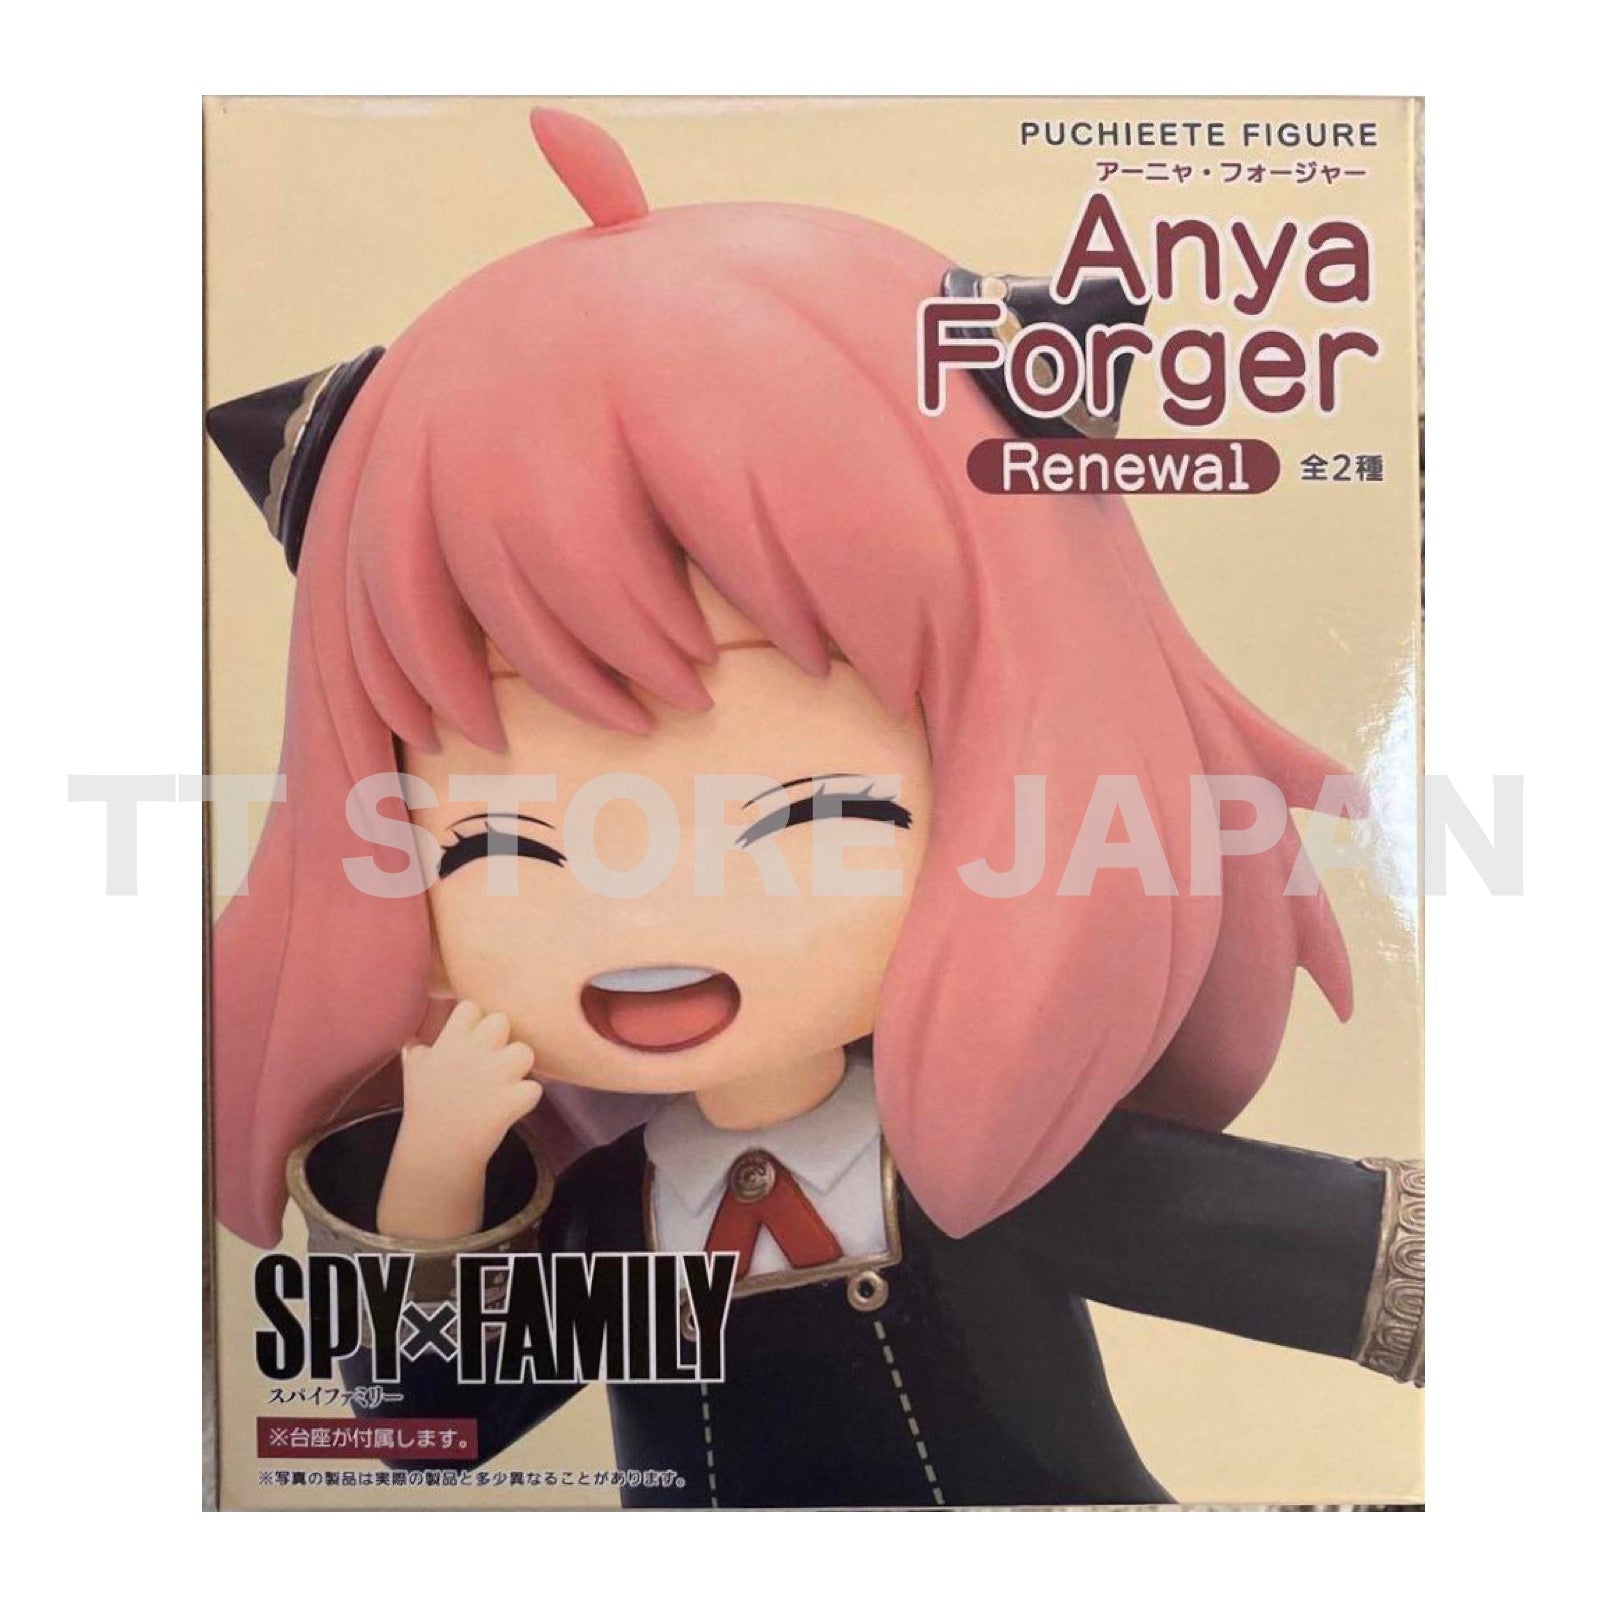 anya forger  Anime, Anime wallpaper, Anime chibi